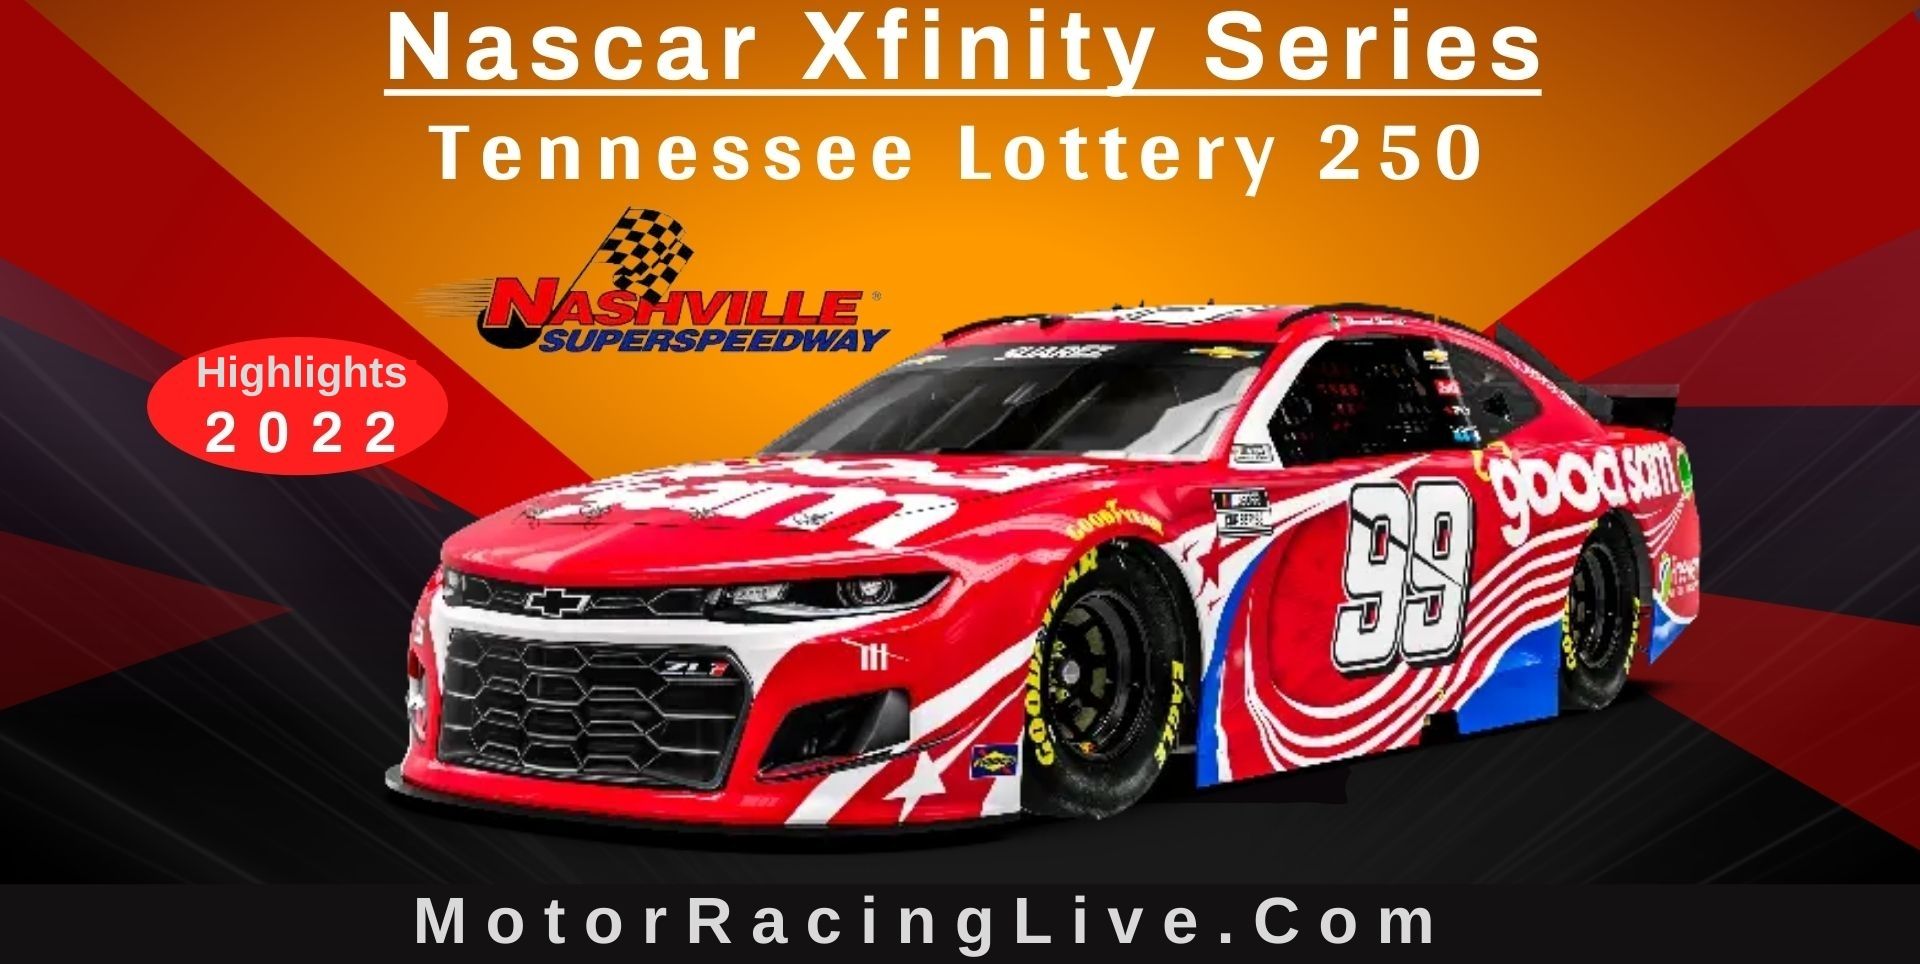 Tennessee Lottery 250 Highlights 2022 NASCAR Xfinity